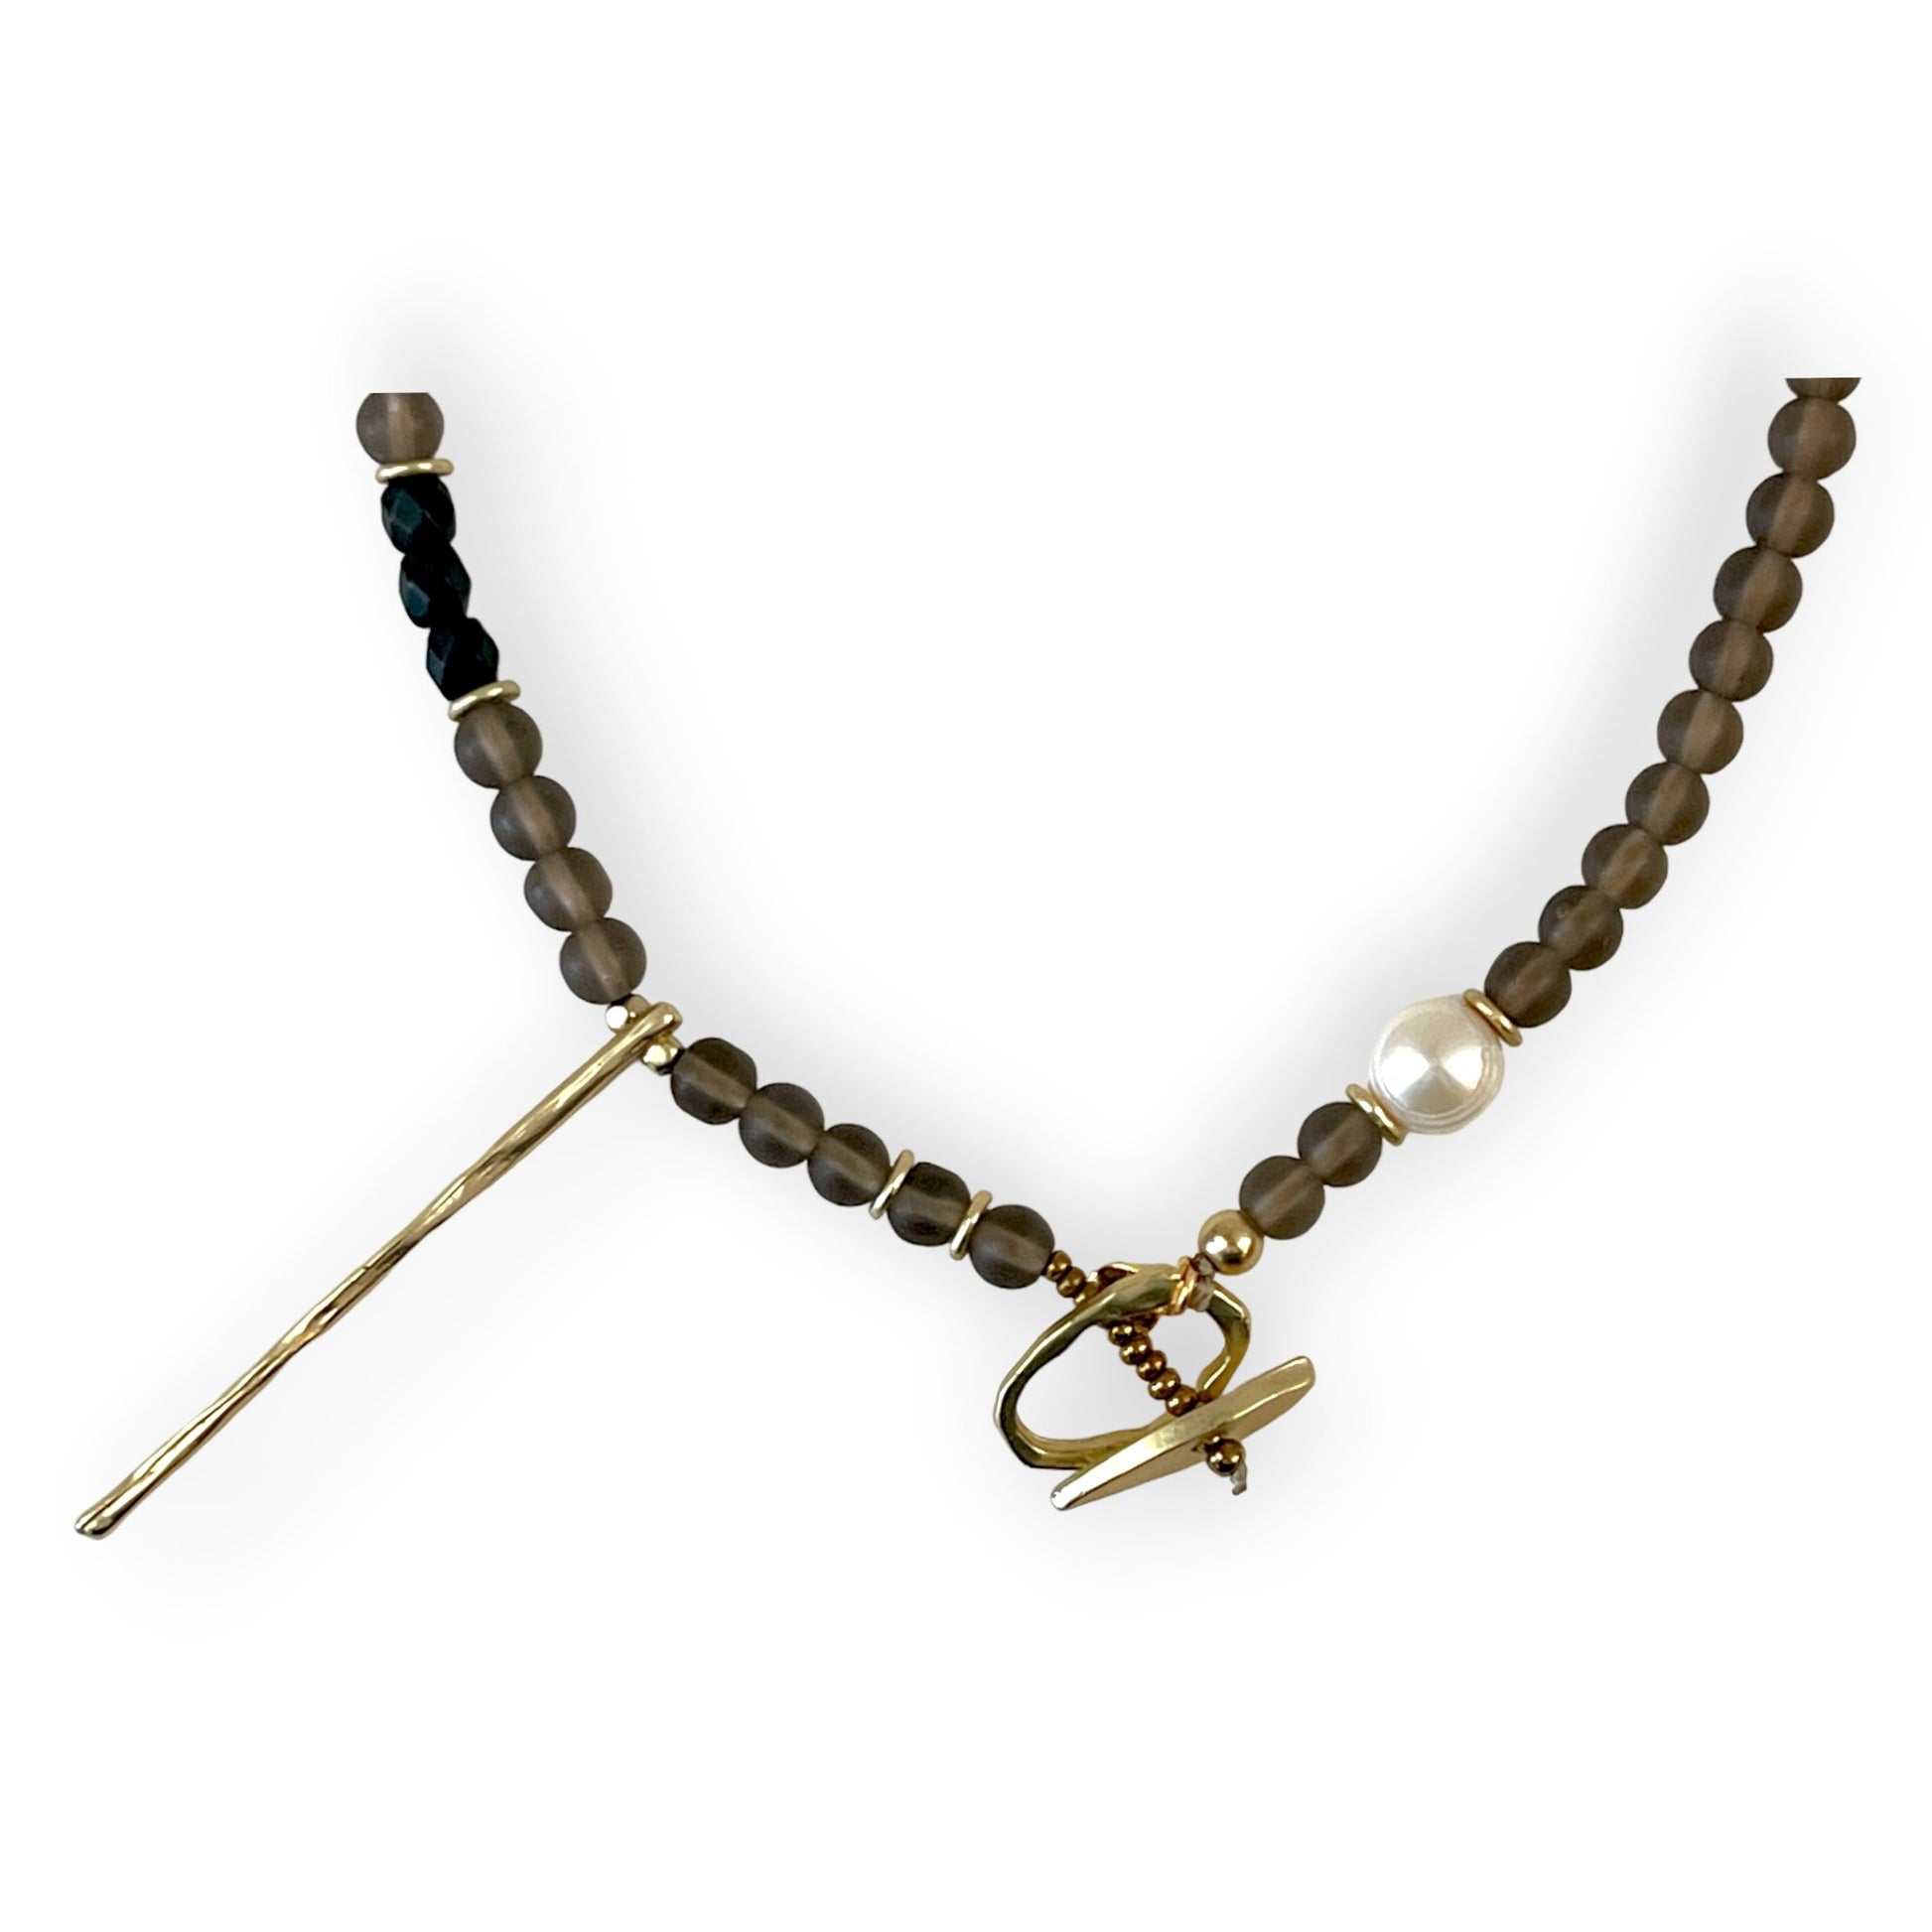 Smokey quartz beaded necklace with black chalcedony, pearl and brass aSundara Joon